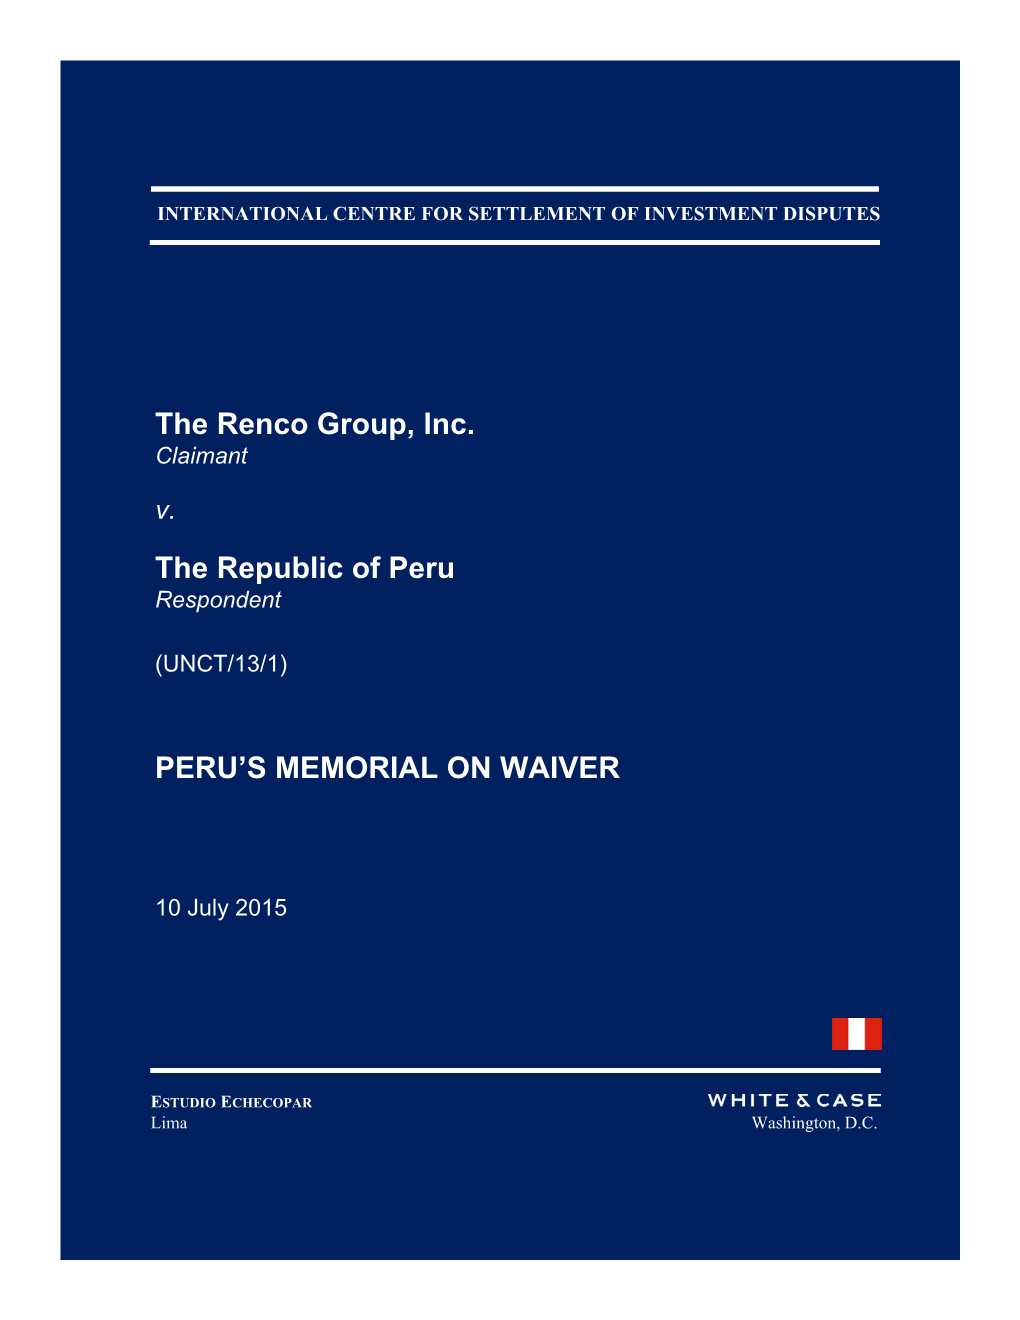 Peru's Memorial on Waiver